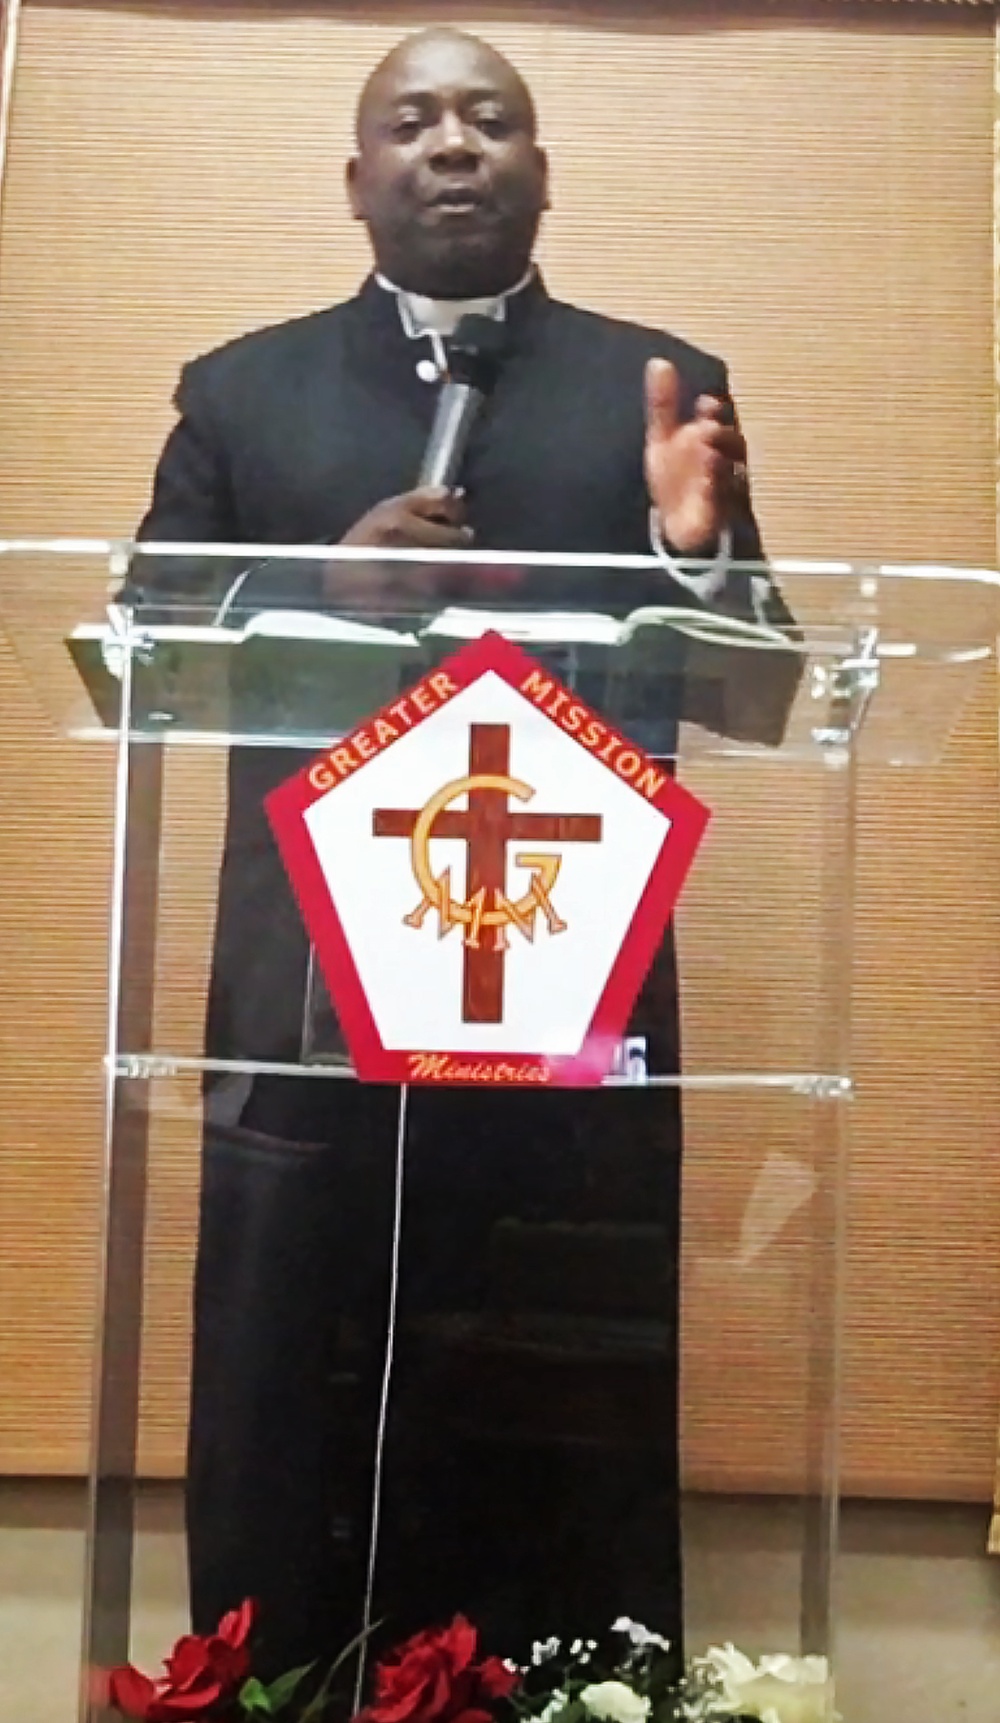 Pastor Michael Weaks